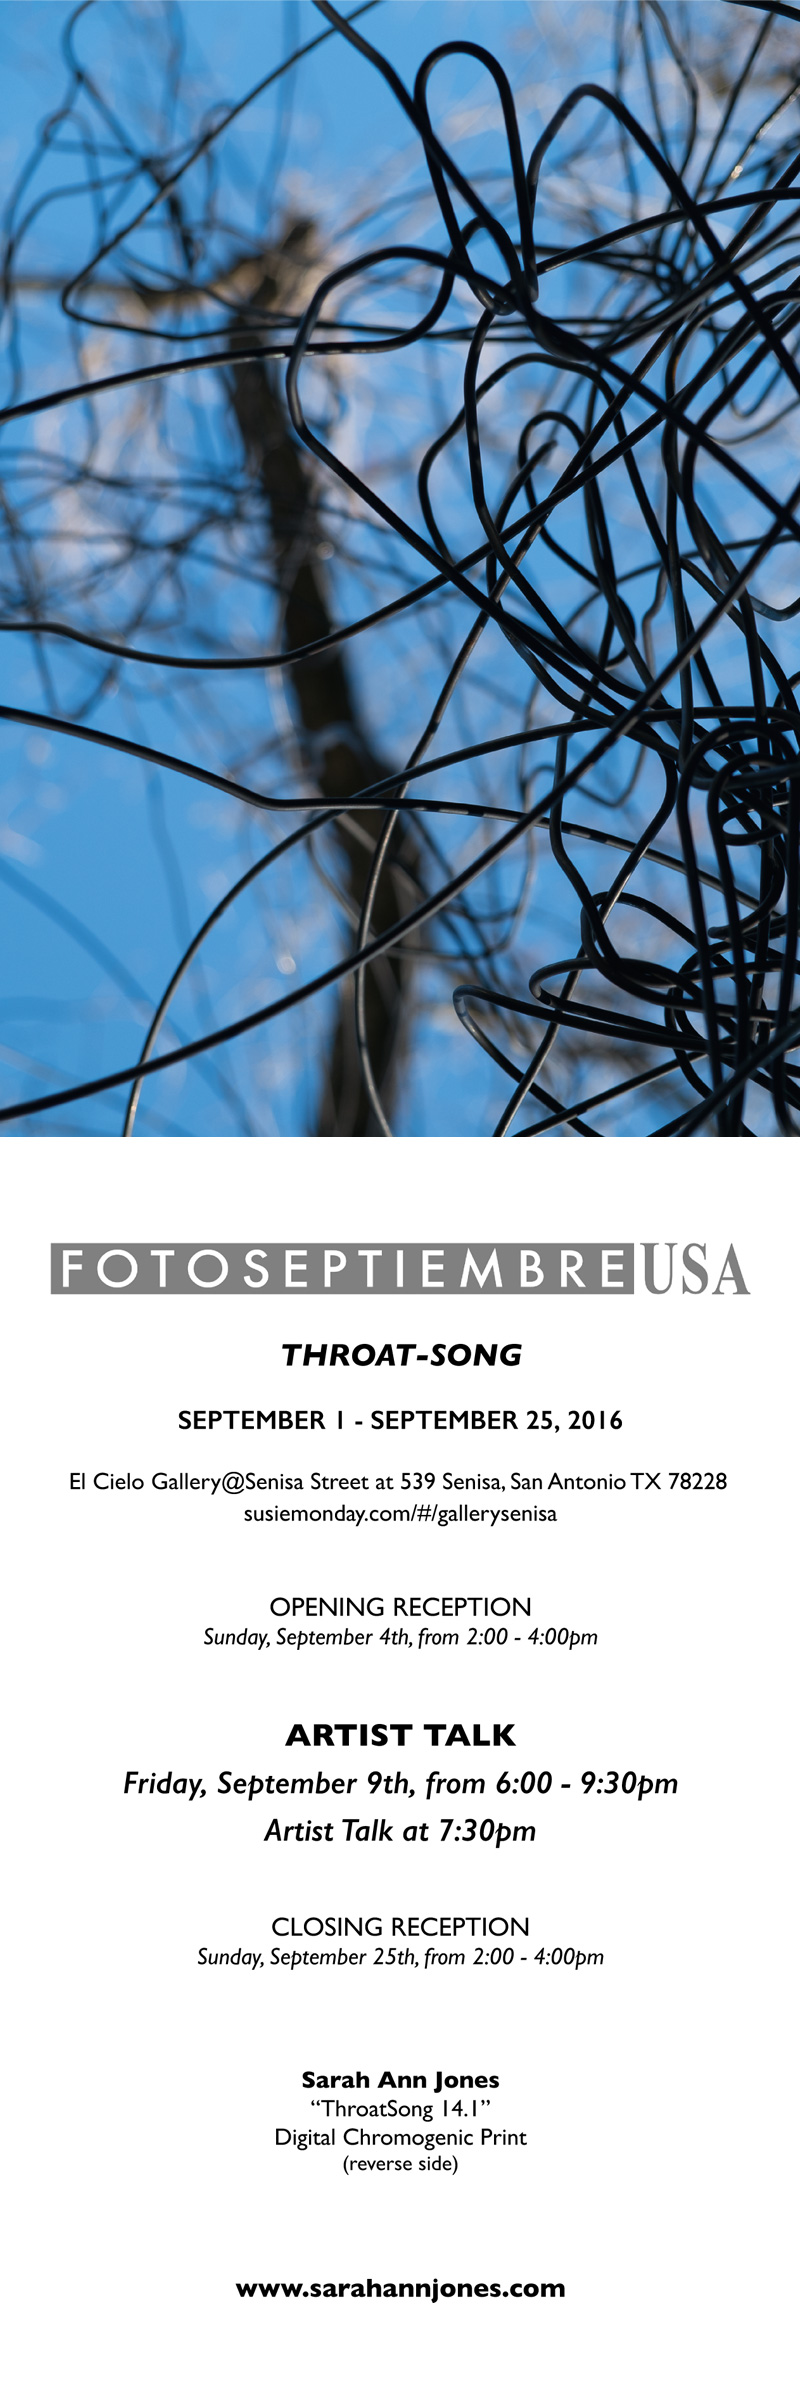 2016-FOTOSEPTIEMBRE-USA_Press-Archives_Sarah-Ann-Jones_Throat-Song-Exhibition_Promo-Card